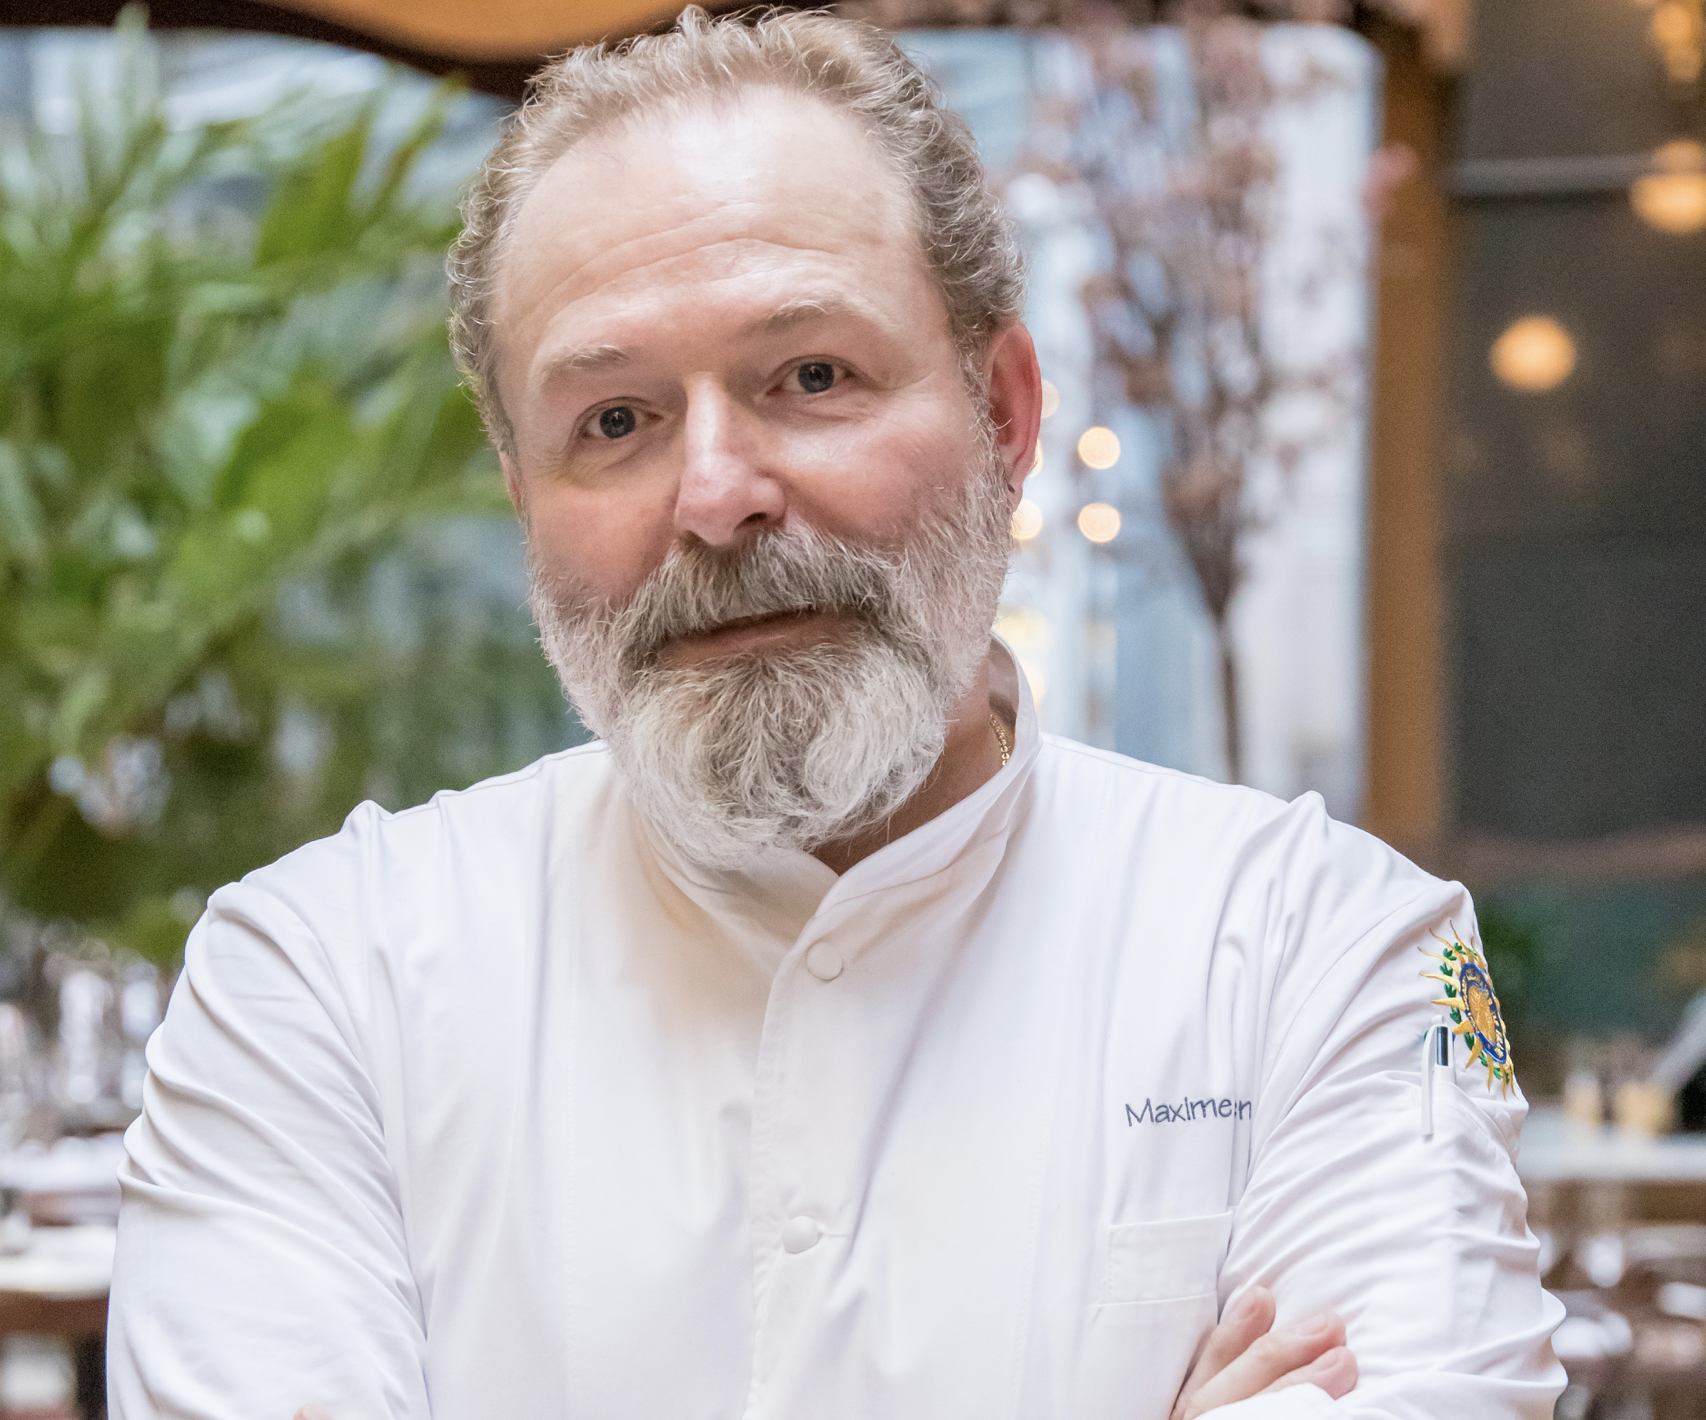 Foodies: Where does NYC rank? Manhattan’s La Grande Boucherie Executive Chef Maxime Kien explains the World’s Culinary Scene